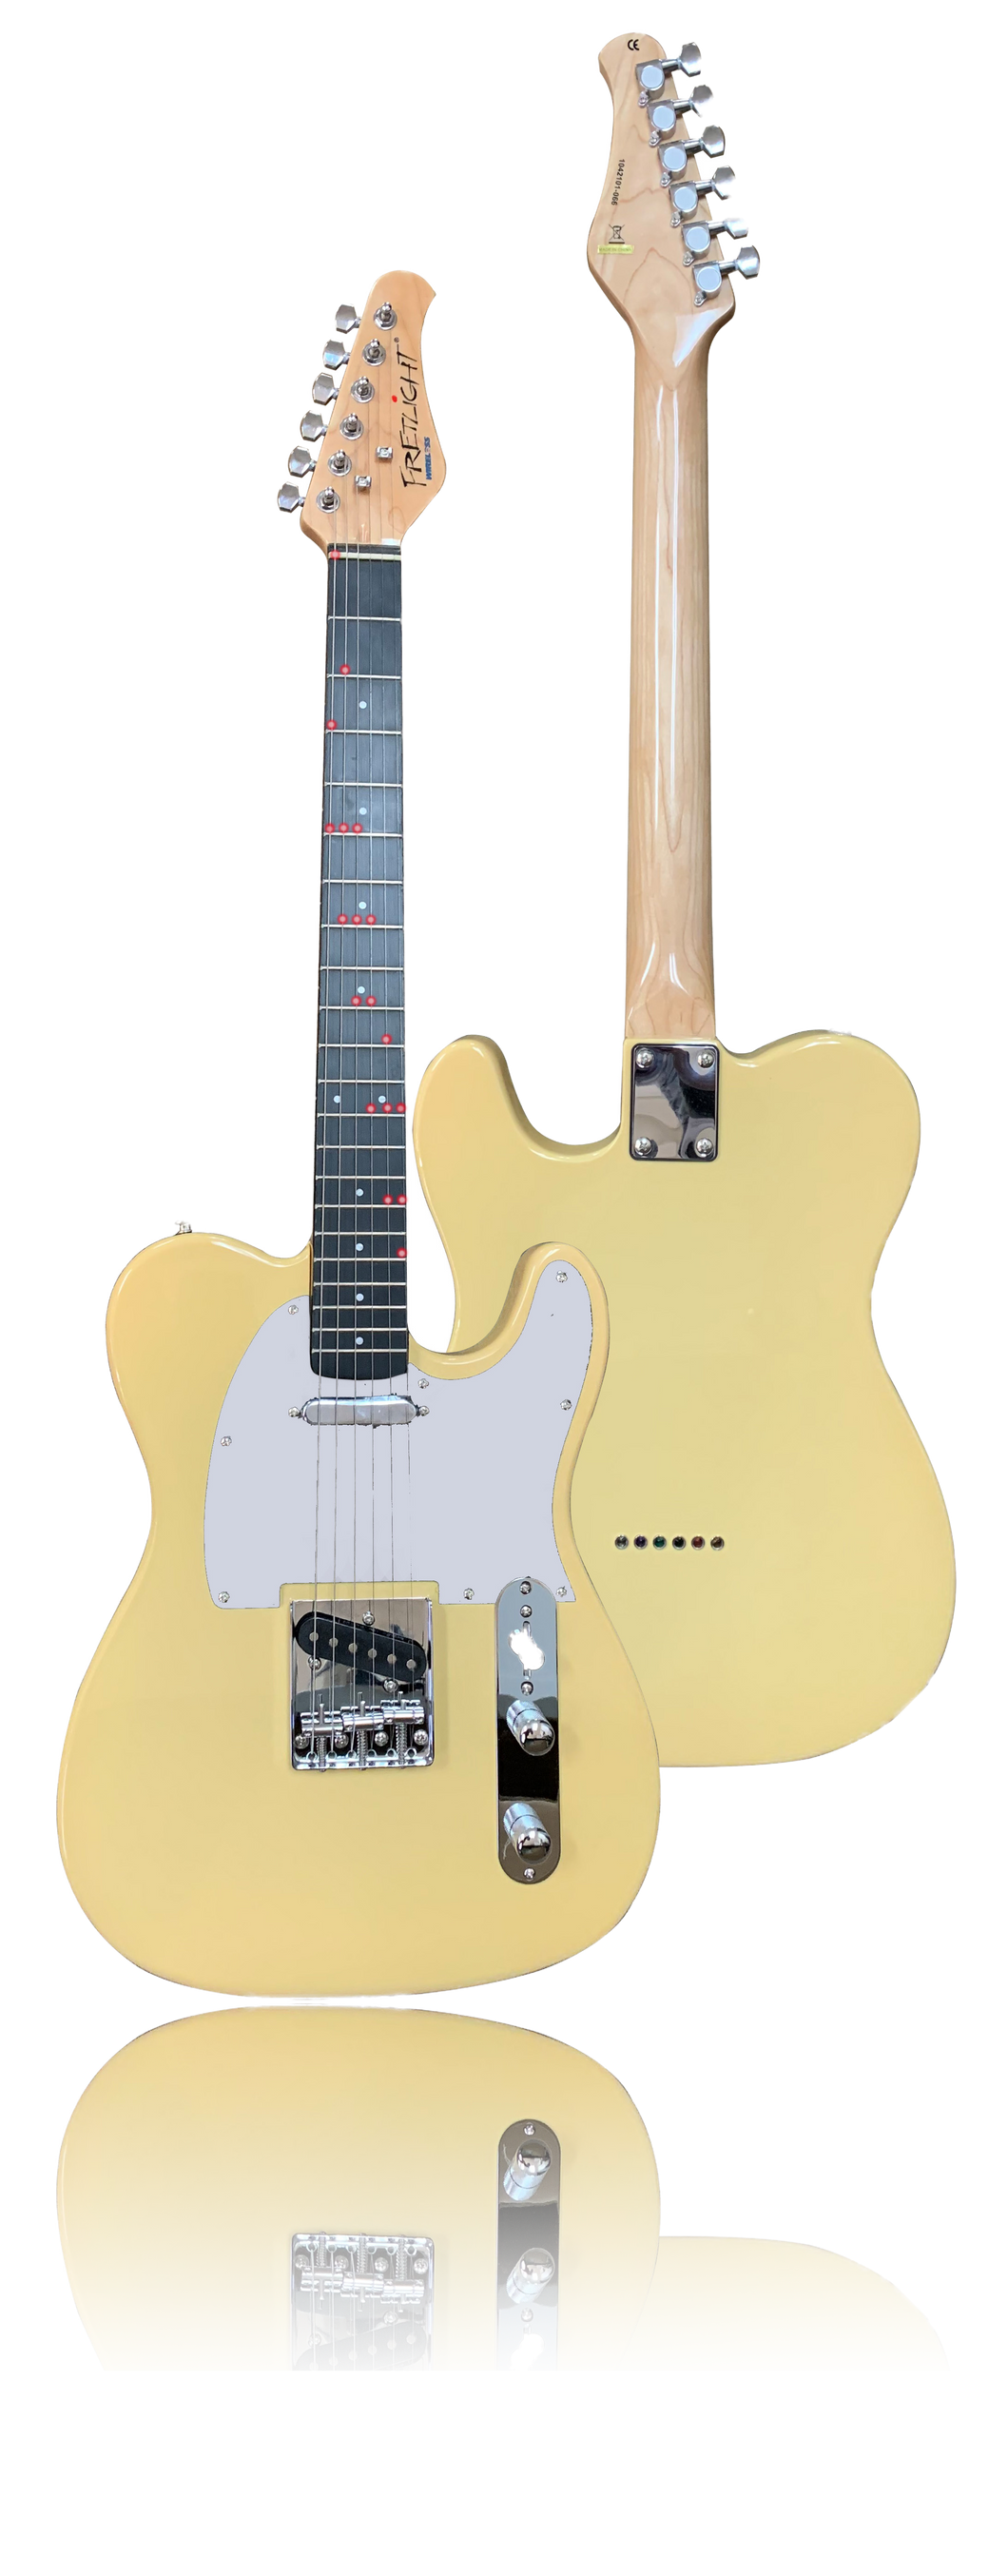 FG-623 Custom Vintage Yellow with White Pickguard